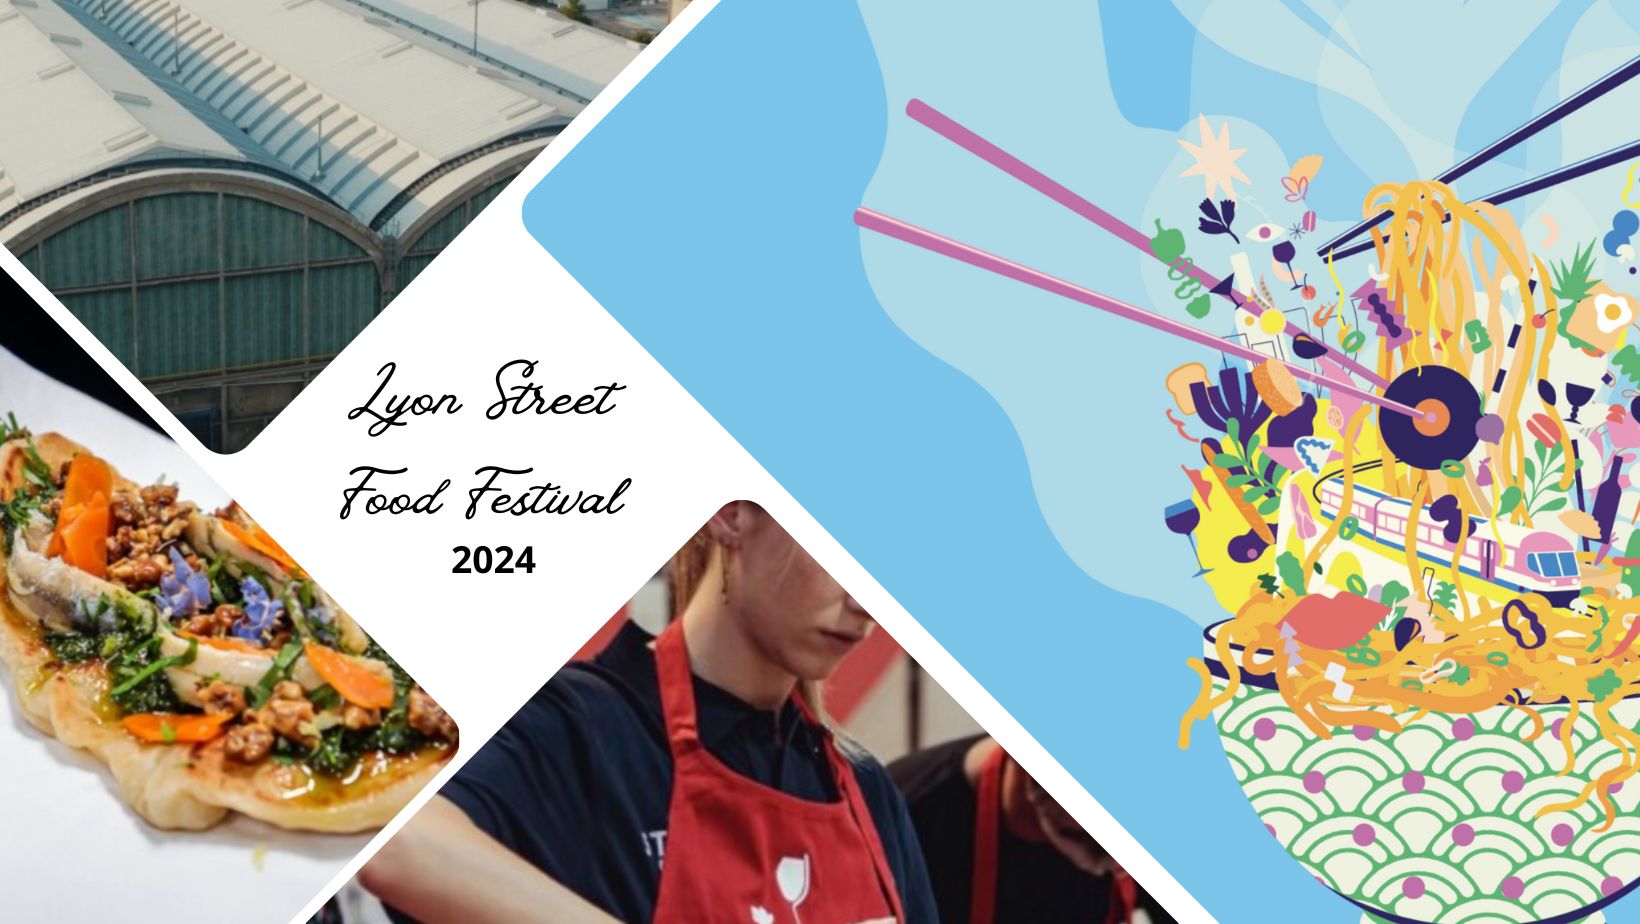 Lyon Street Food Festival 2024 : programme, dates, horaires et tarifs